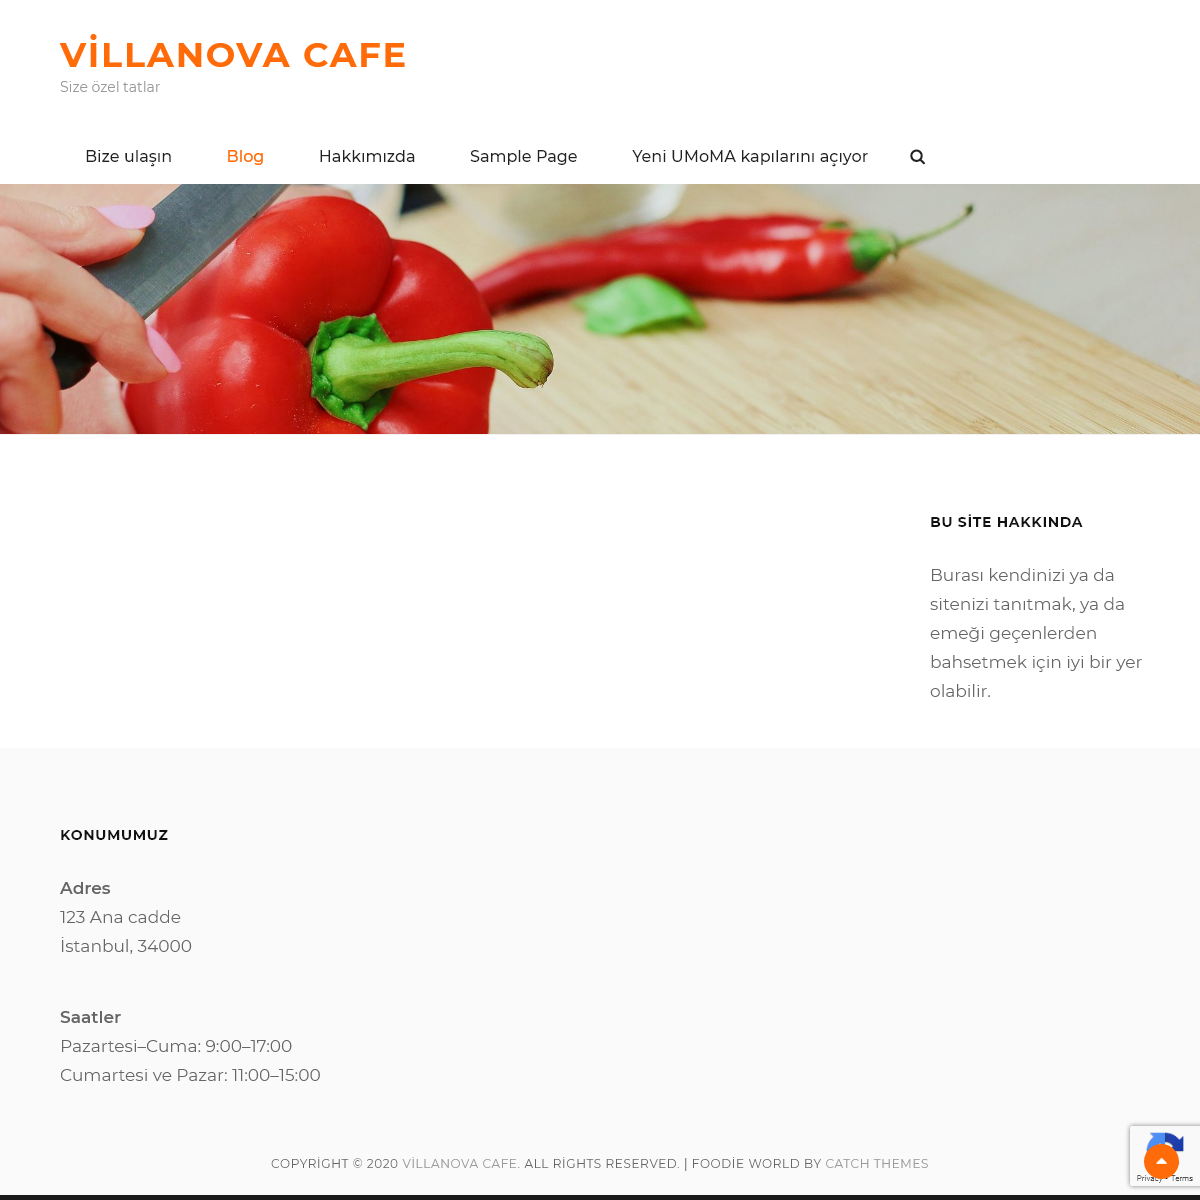 VillaNova Cafe â€“ Size Ã¶zel tatlar